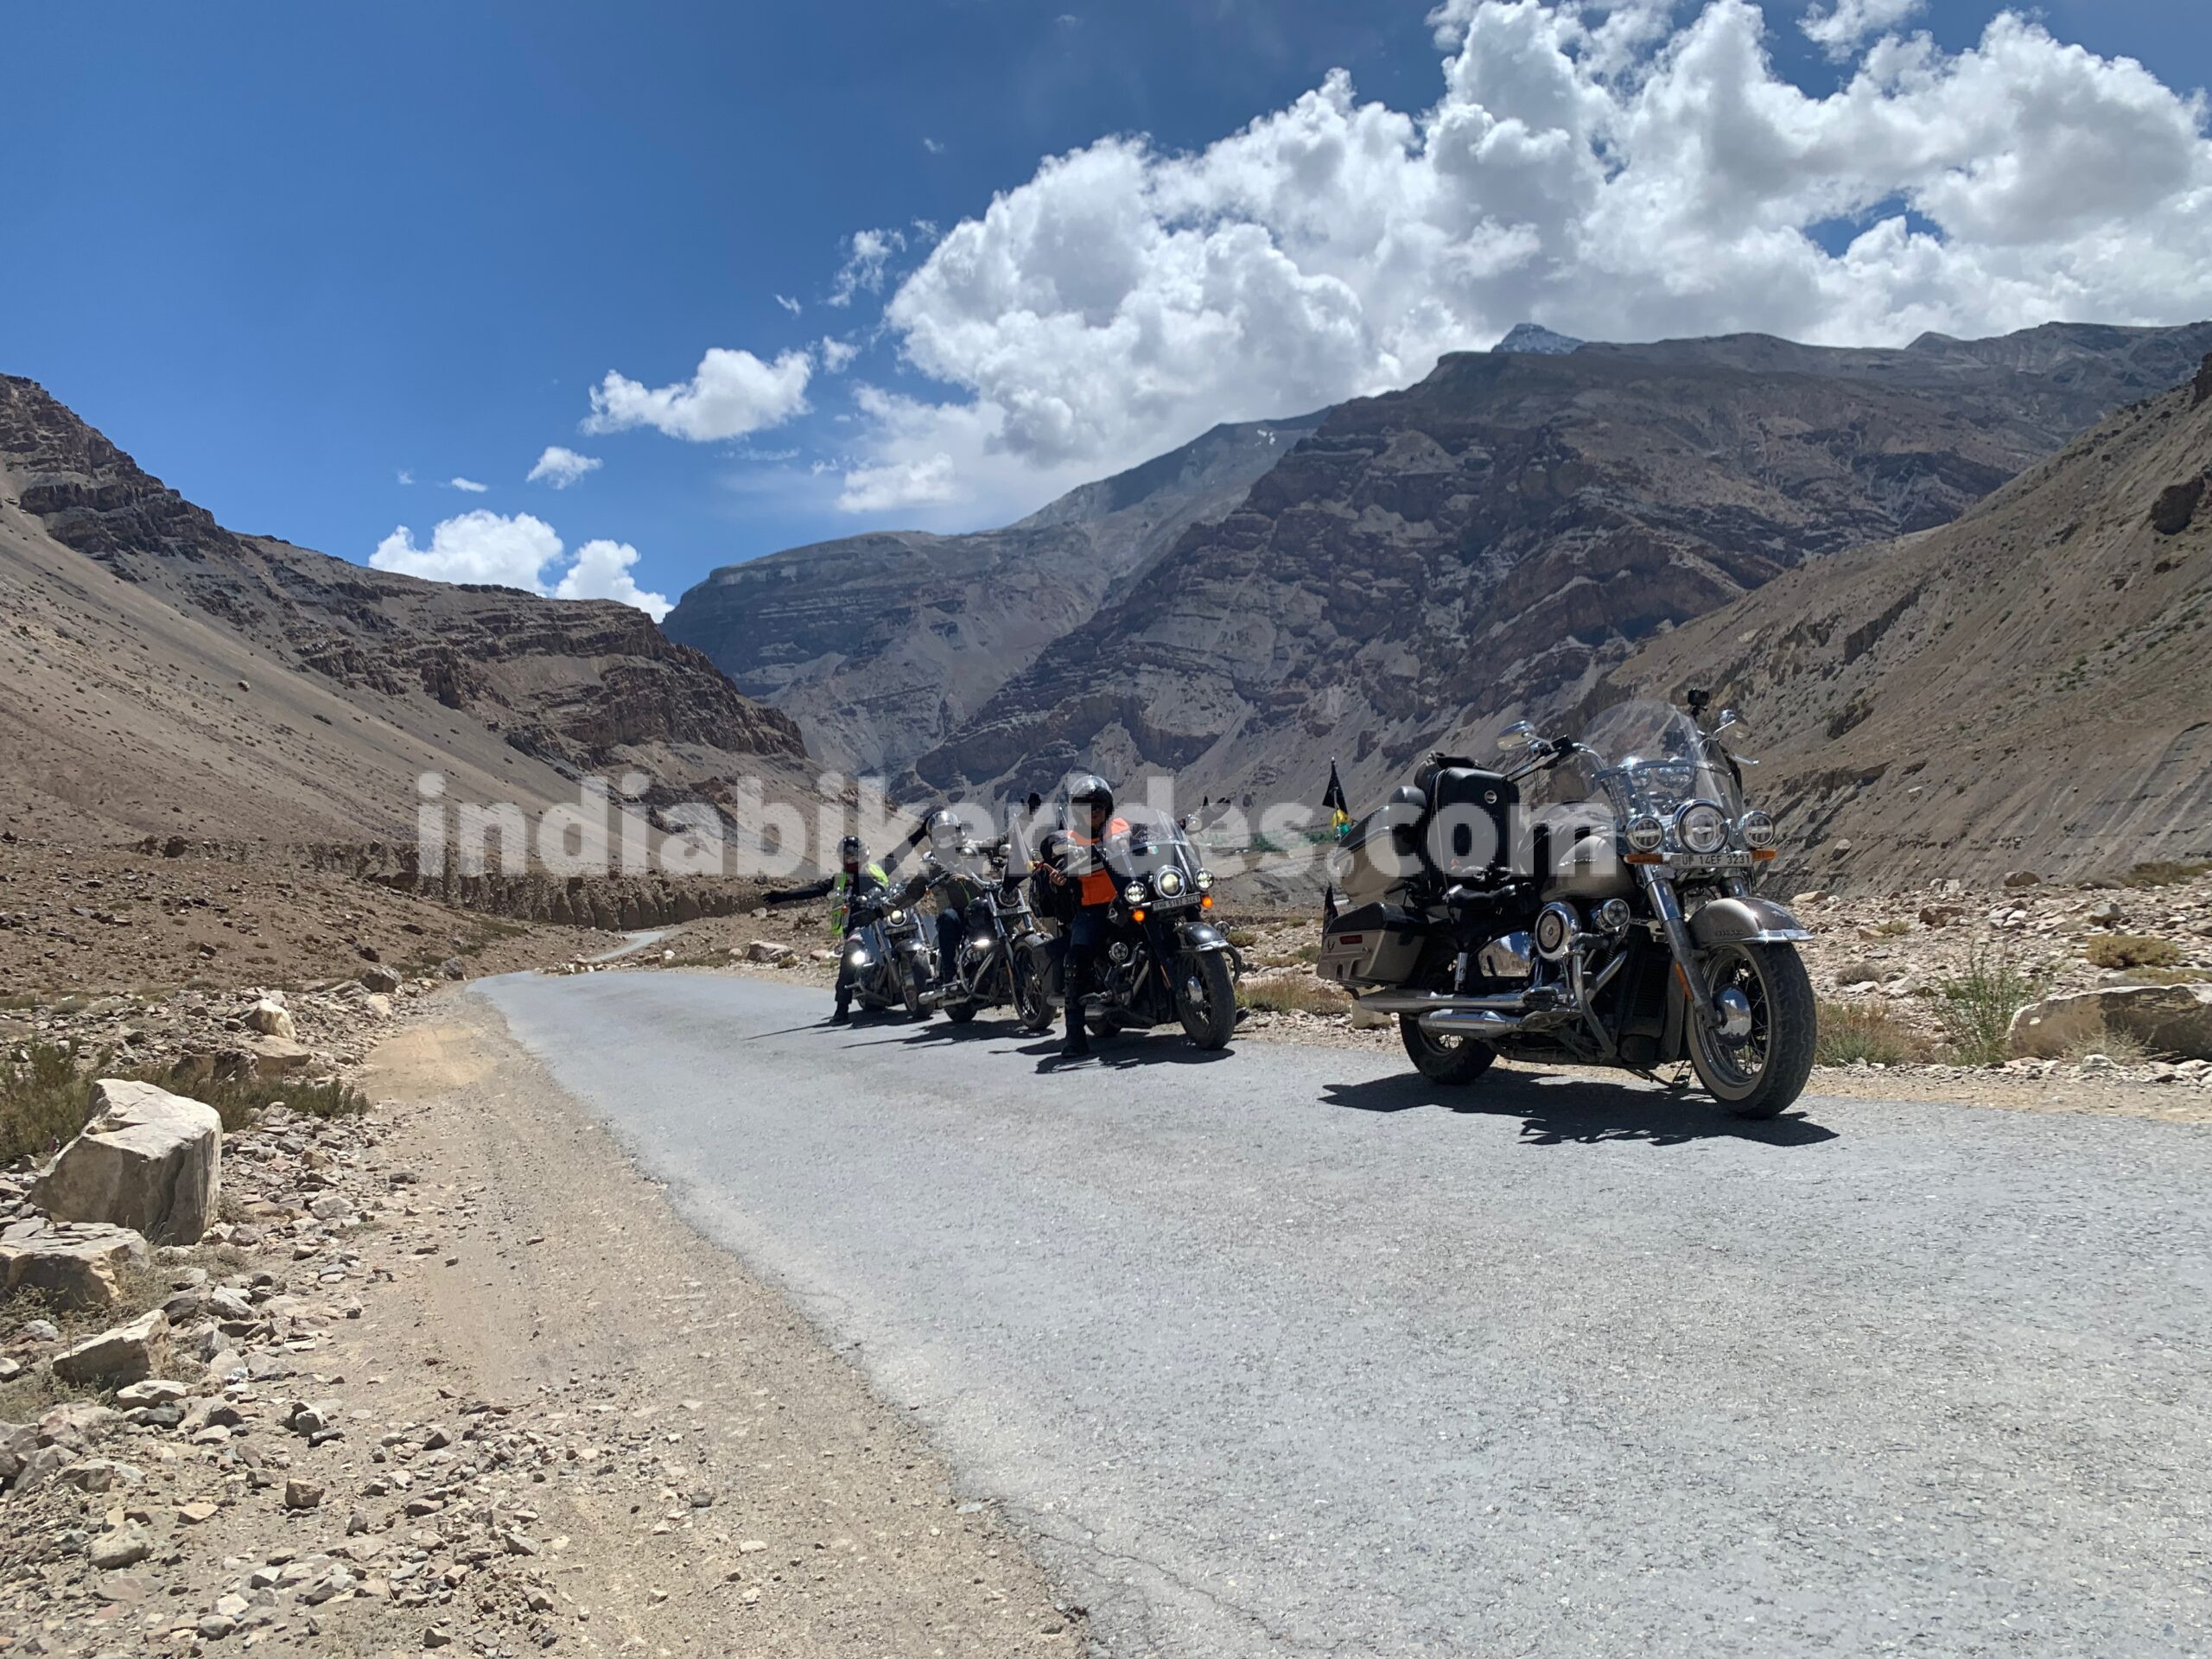 Harley Davidson, Spiti Valley, India Bike rides